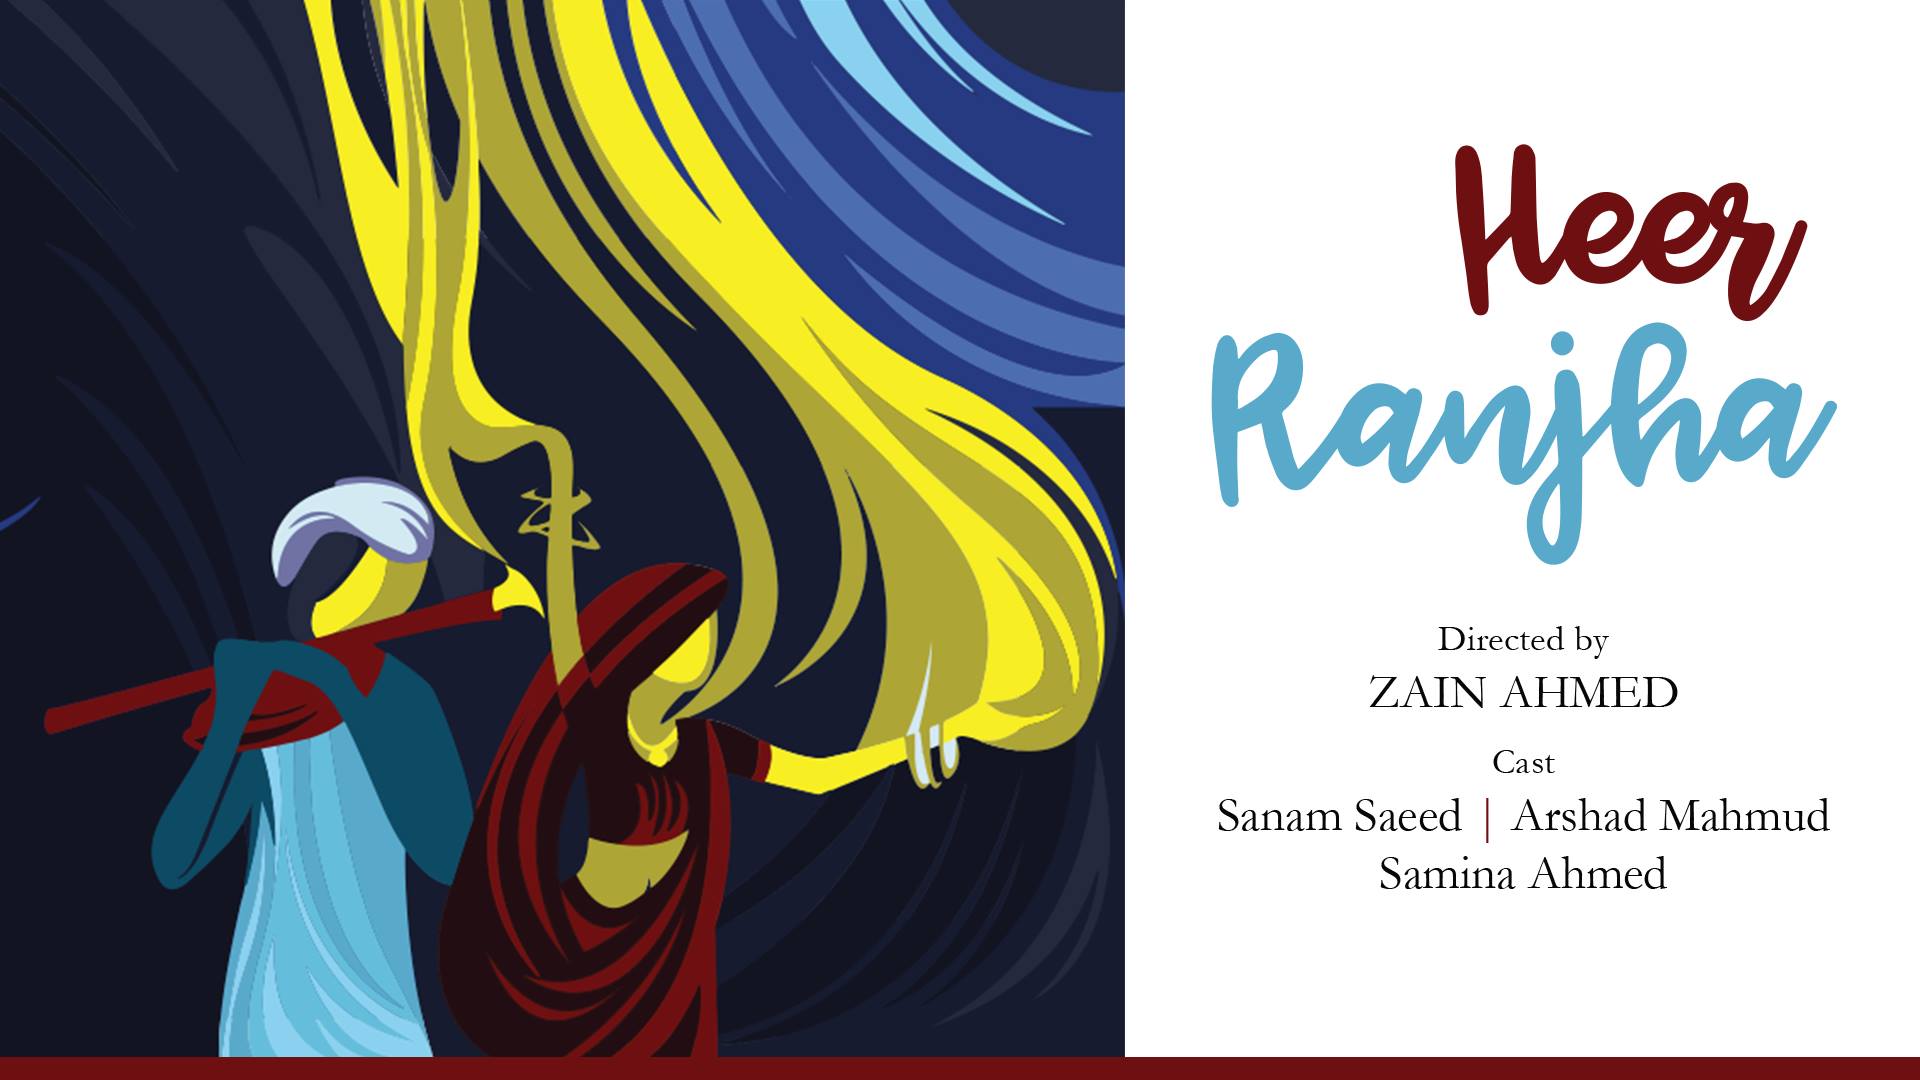 Gallery - Heer Ranjha Illustration , HD Wallpaper & Backgrounds